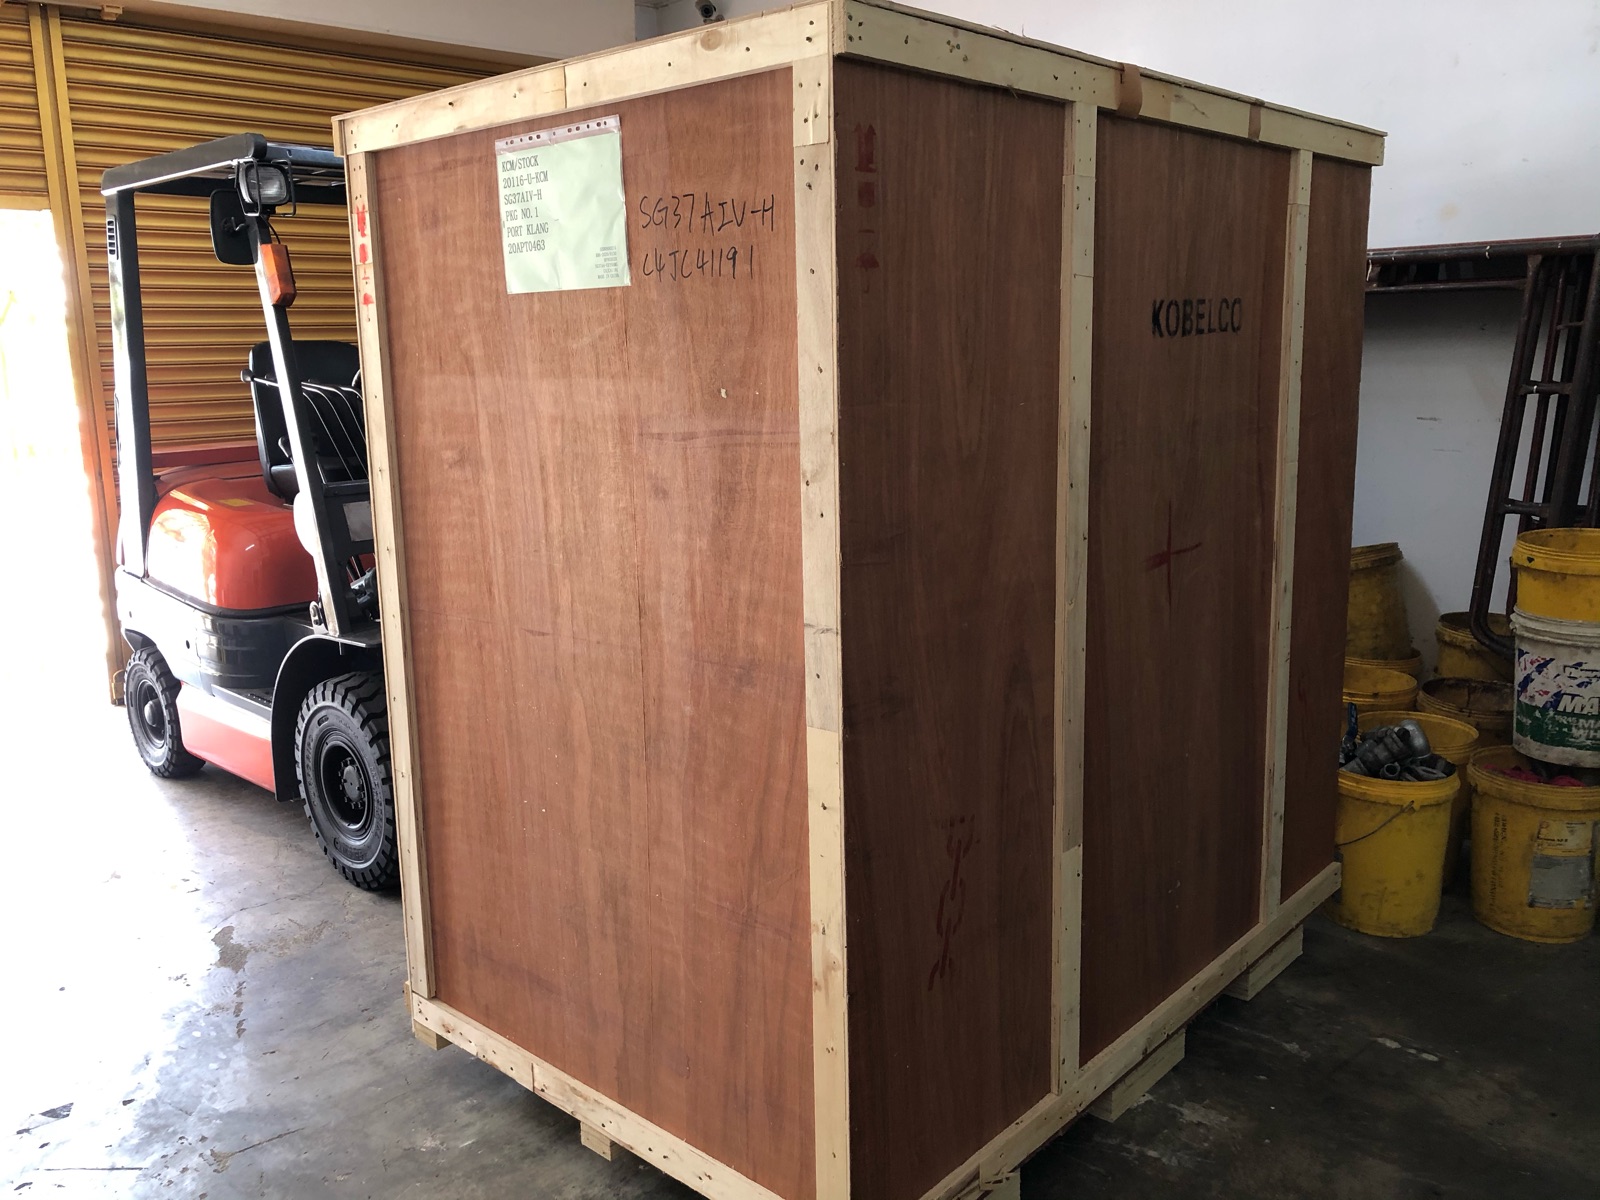 Forklift Unloading New Kobelco Air Compressor SG37AIV-H 